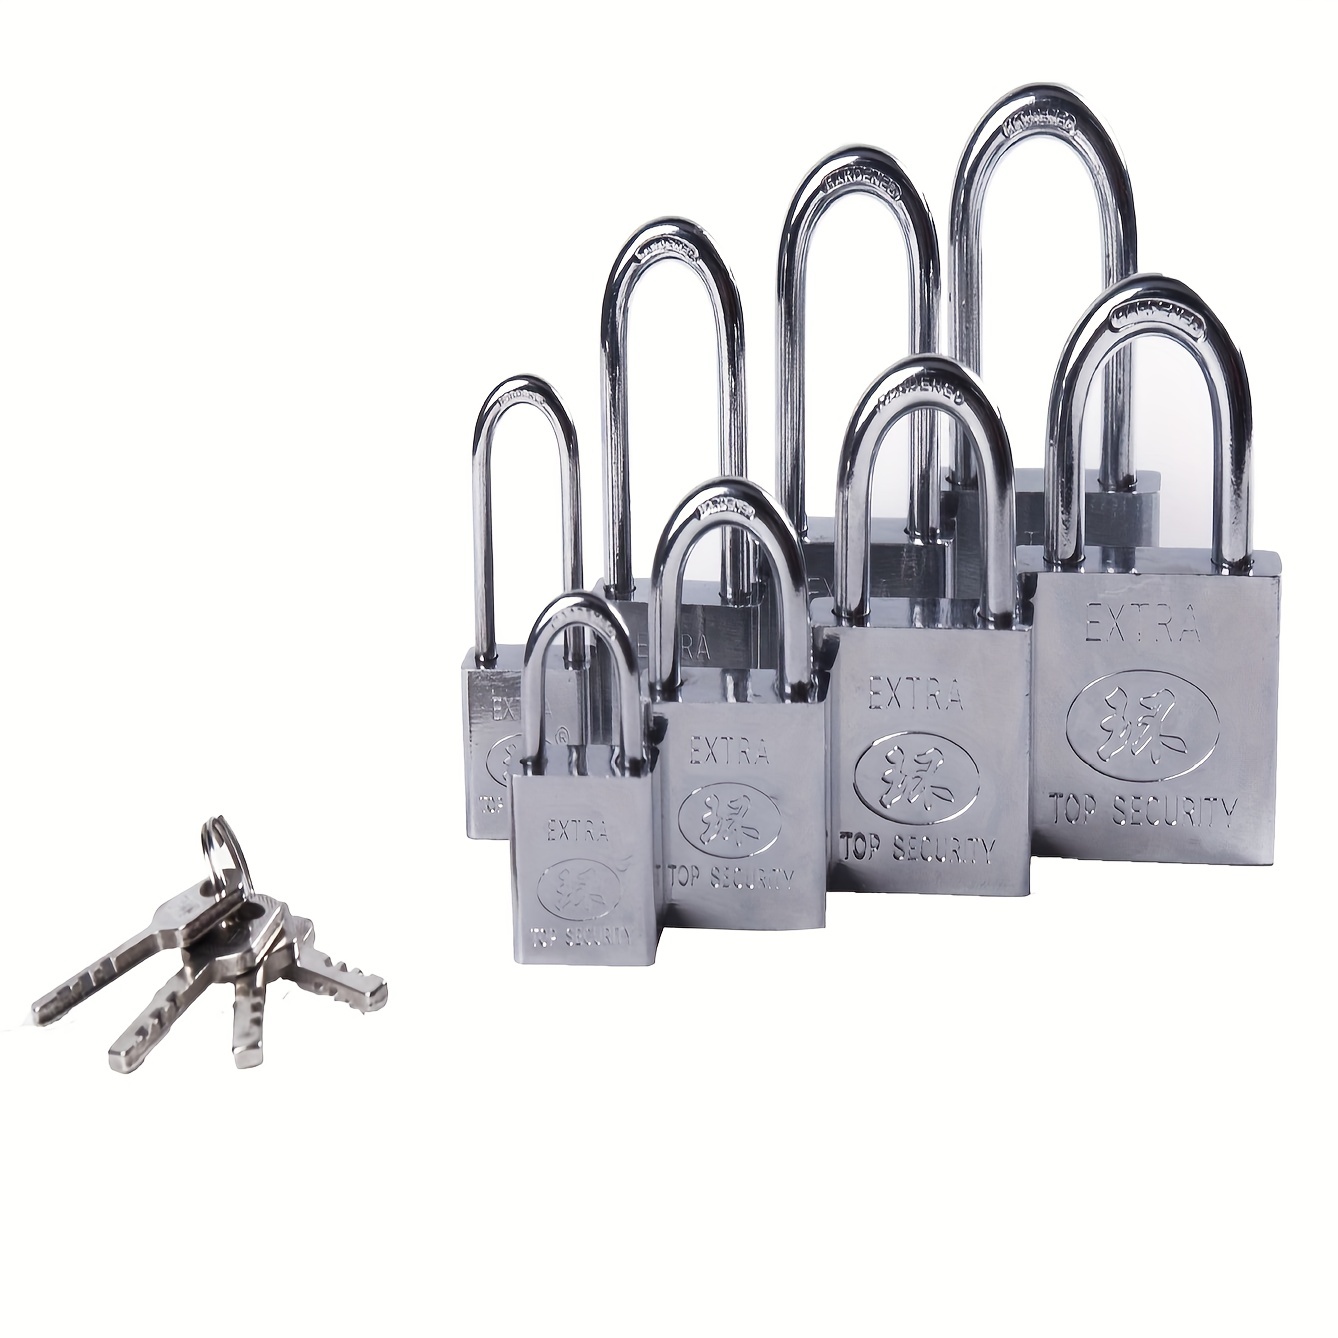 Padlock 40mm Long Beam Gym Locker Lock Keyed Padlocks,Stainless Padlock with 4 Keys,Stainless Lock with Key Padlock,Suitable for Gym Locker Lock